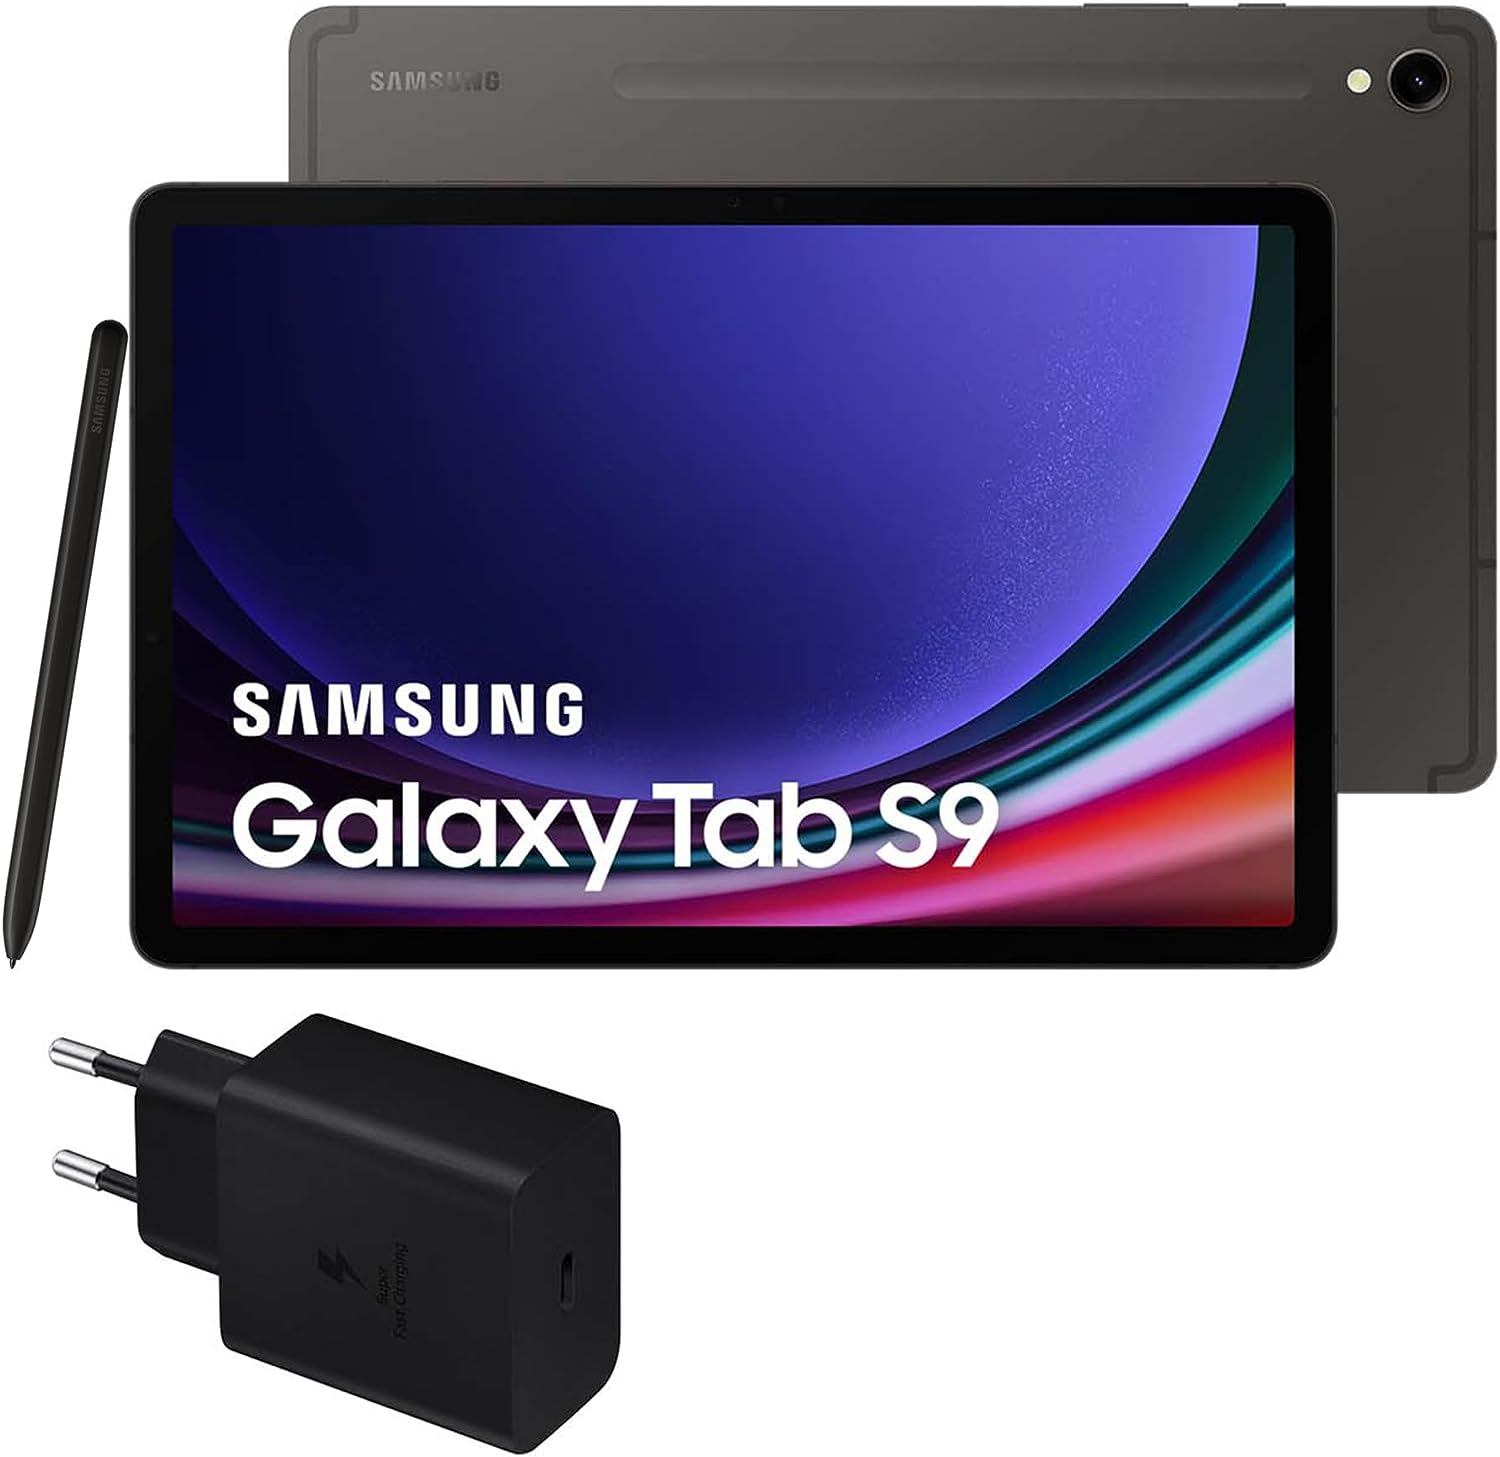 Samsung Galaxy Tab S9 vs iPad Pro